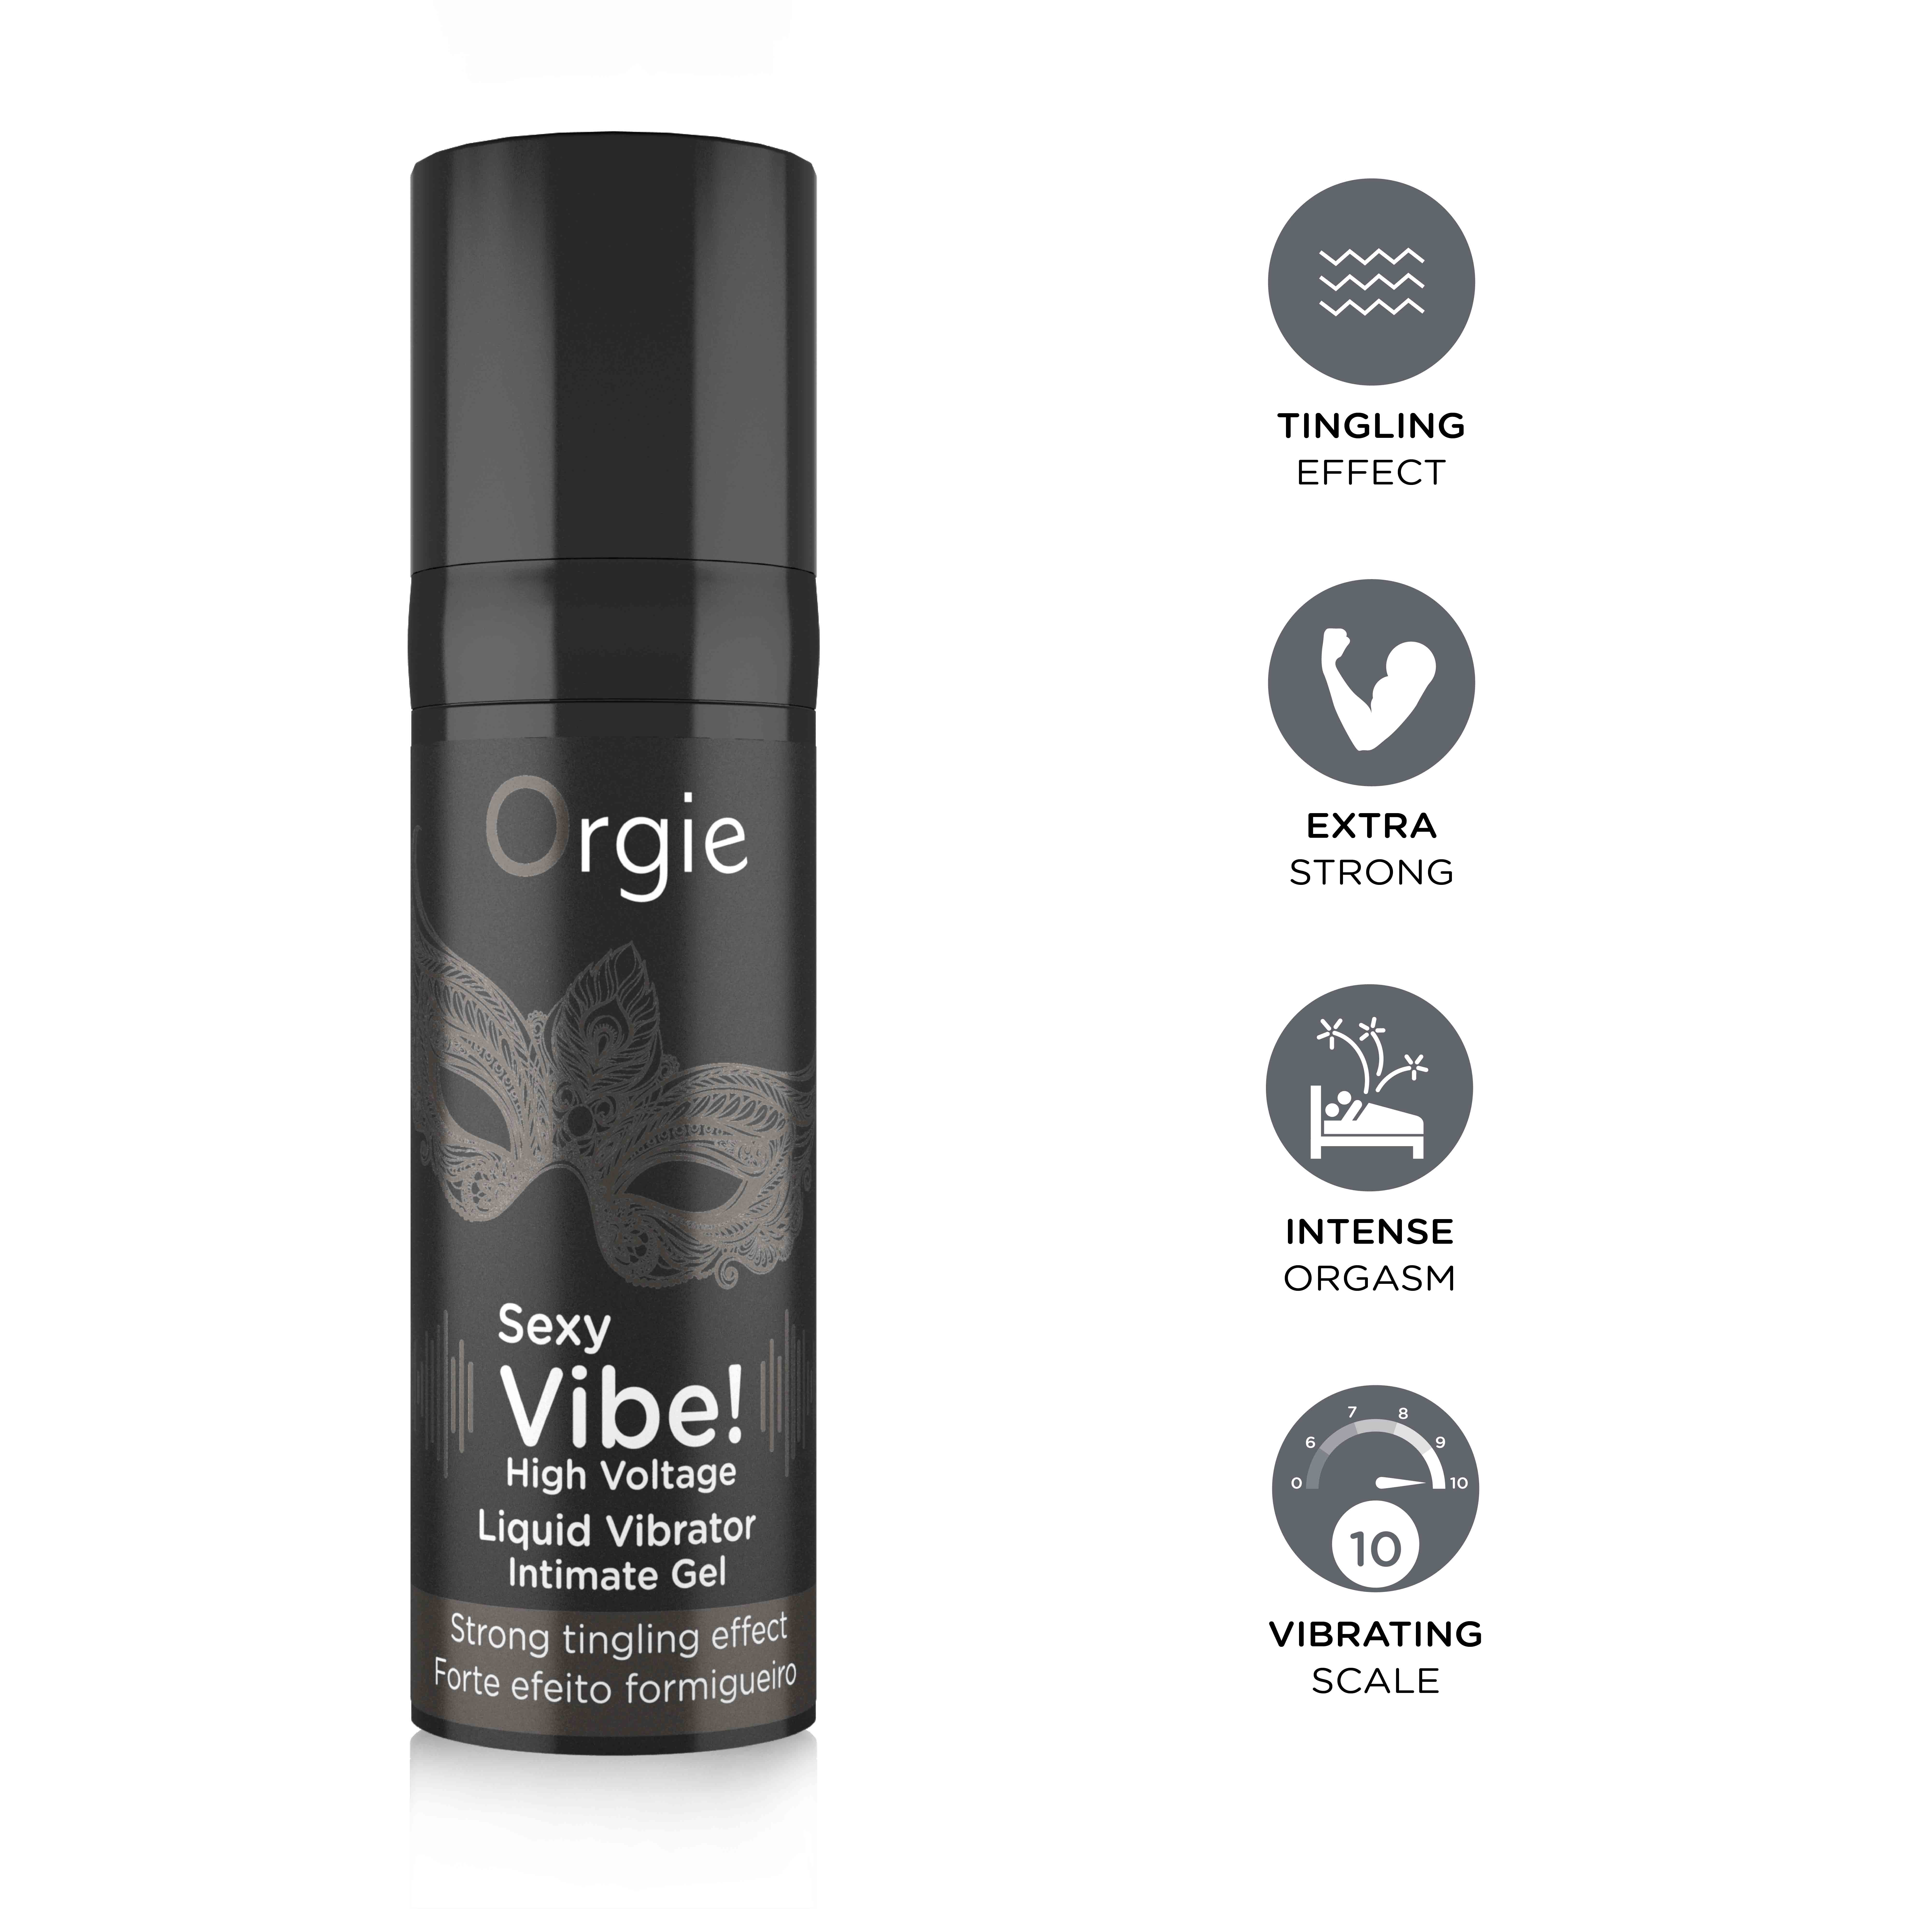 ORGIE Sexy Vibe! High Voltage - Liquid Vibrator 15ml